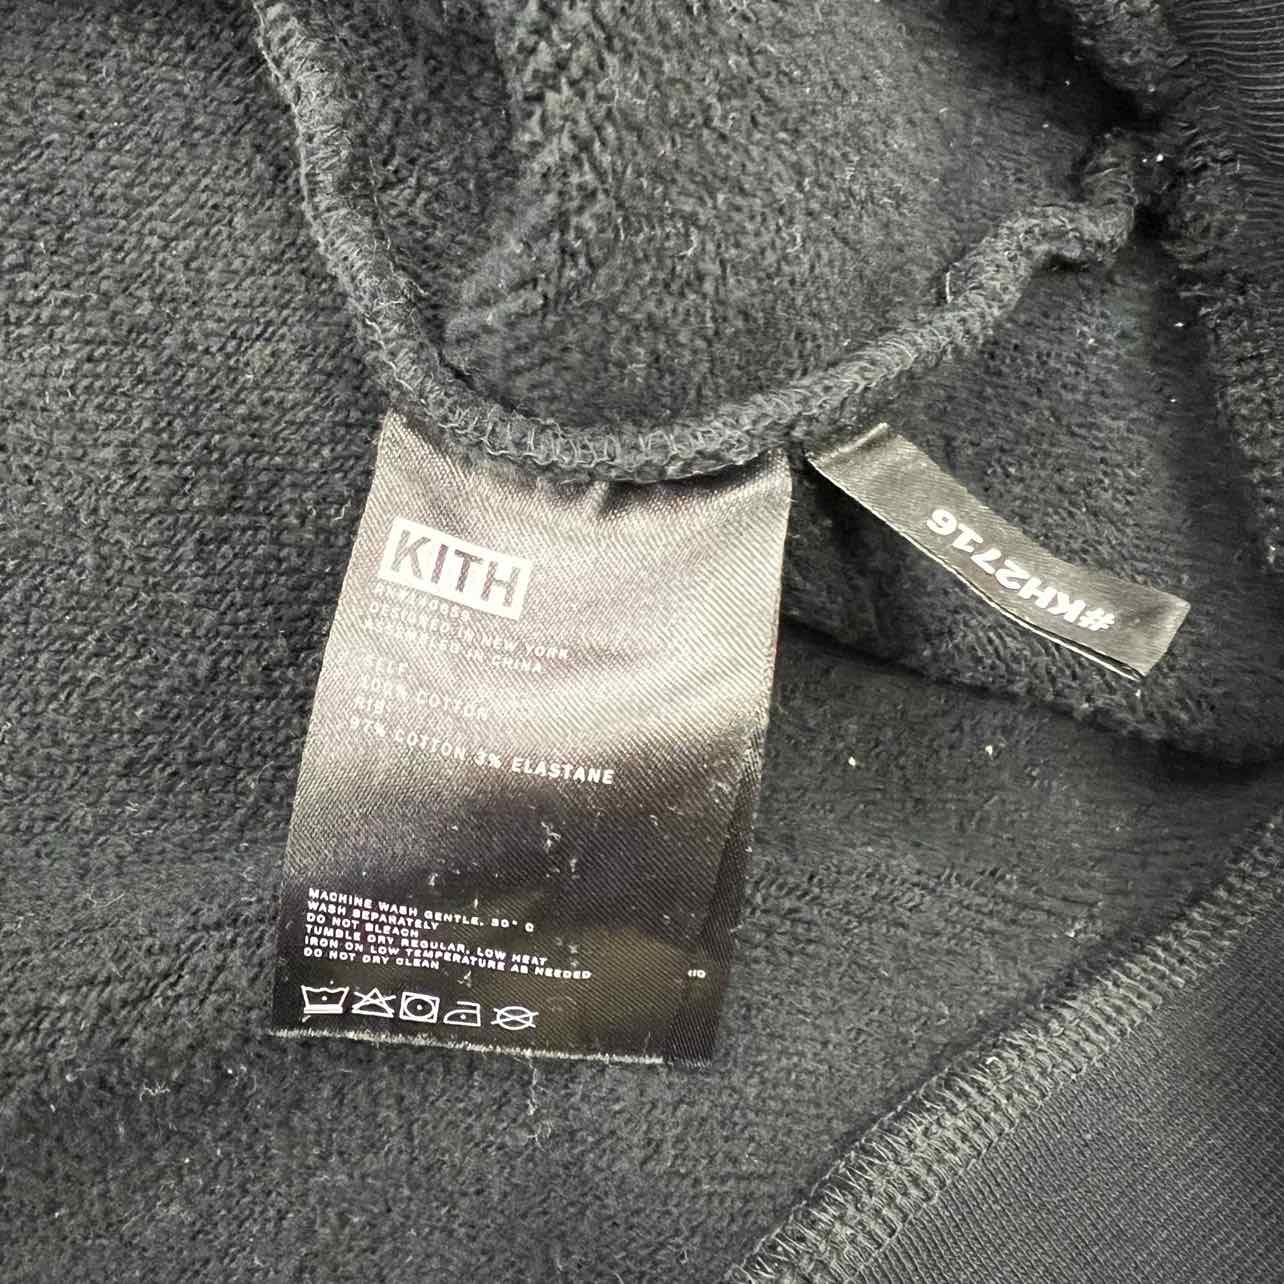 Kith Crewneck Sweater "ROCKY MILLION TO ONE" Black Used Size 2XL